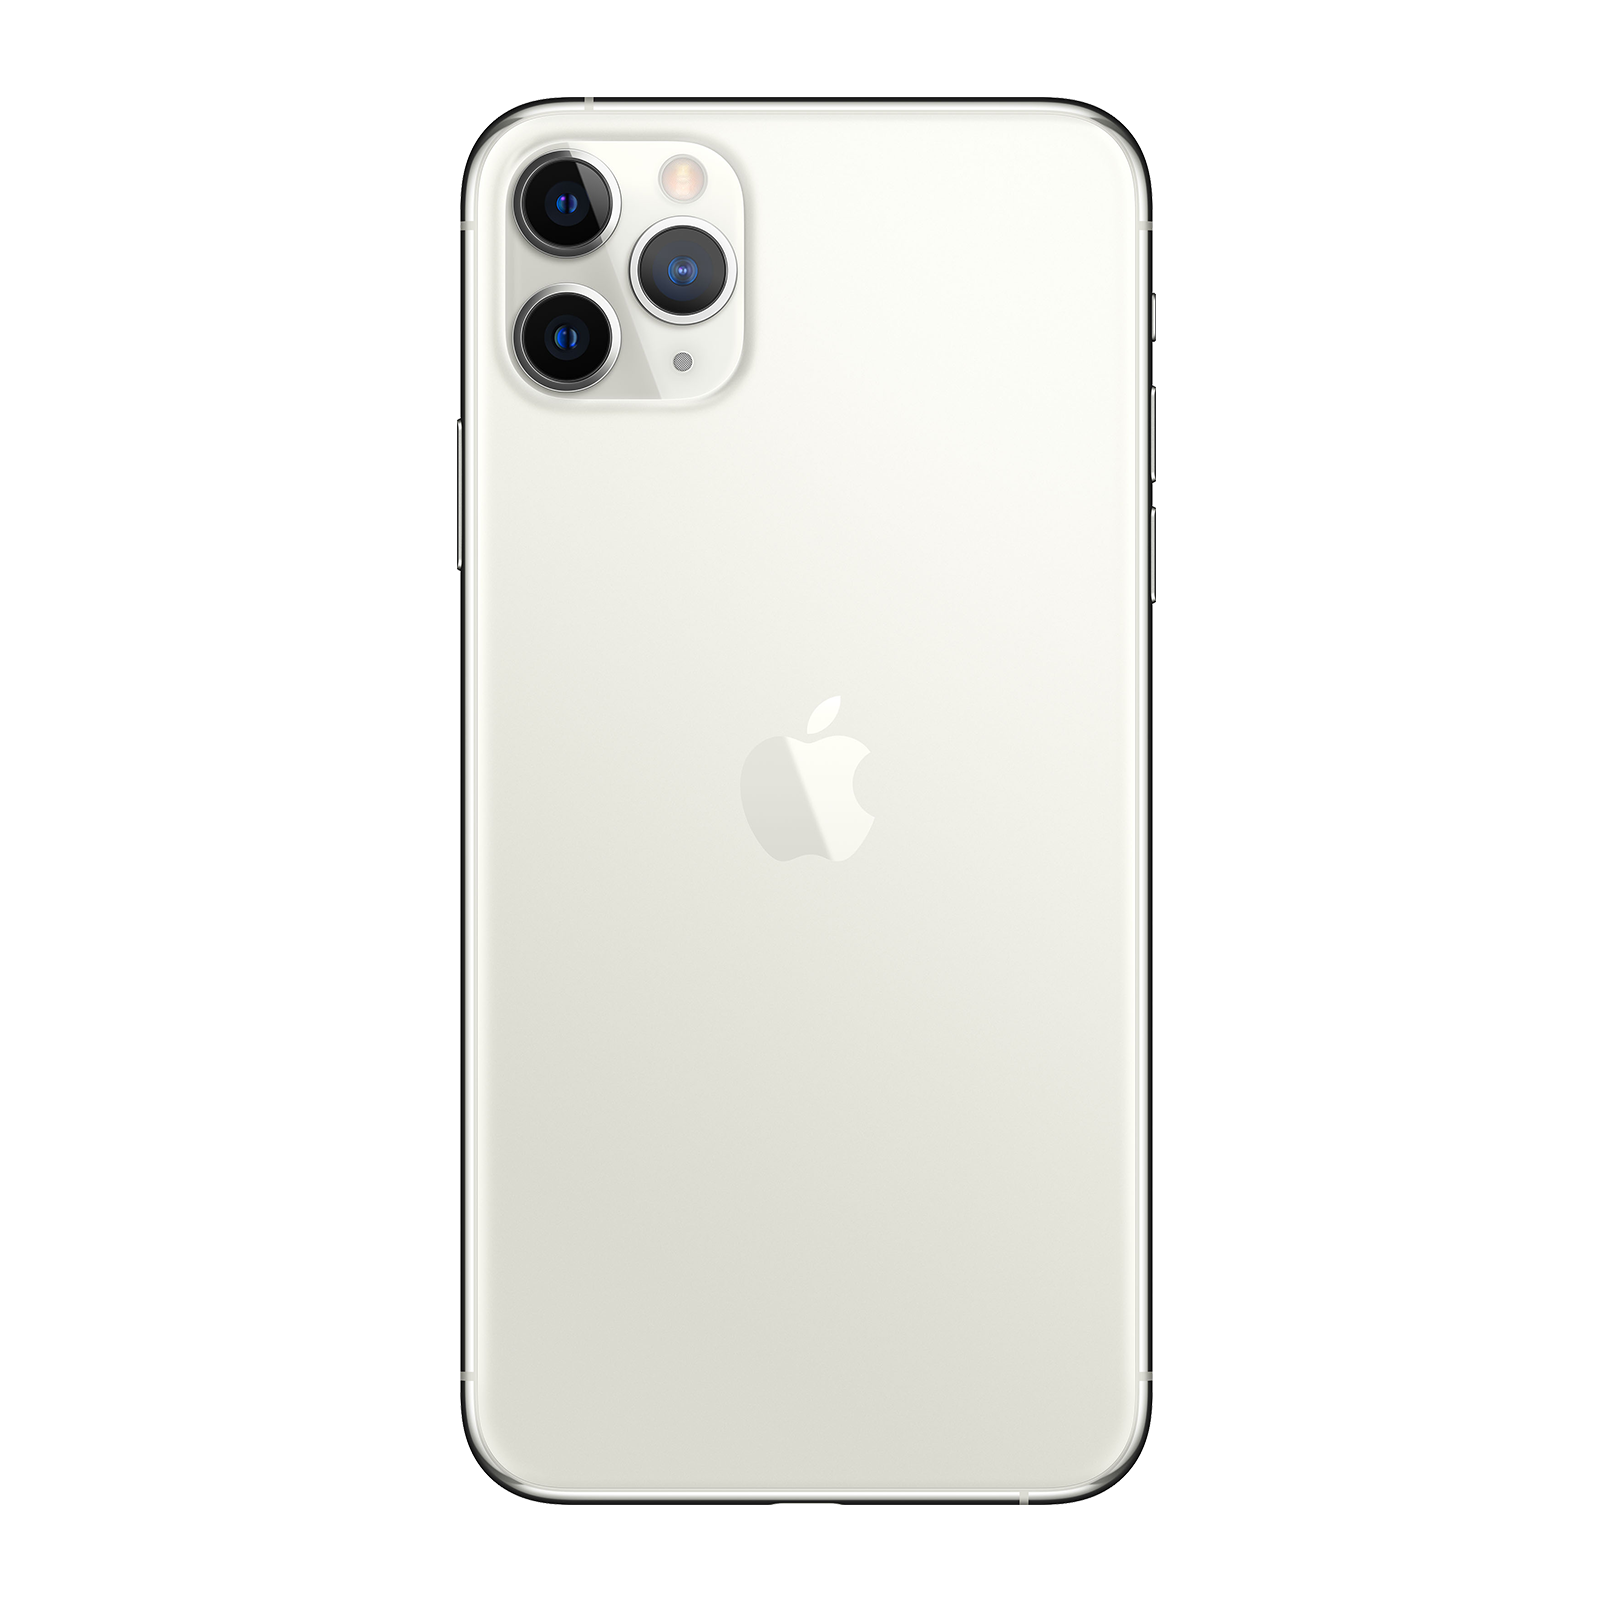 Apple iPhone 11 Pro Max 256GB Silver Good - Unlocked